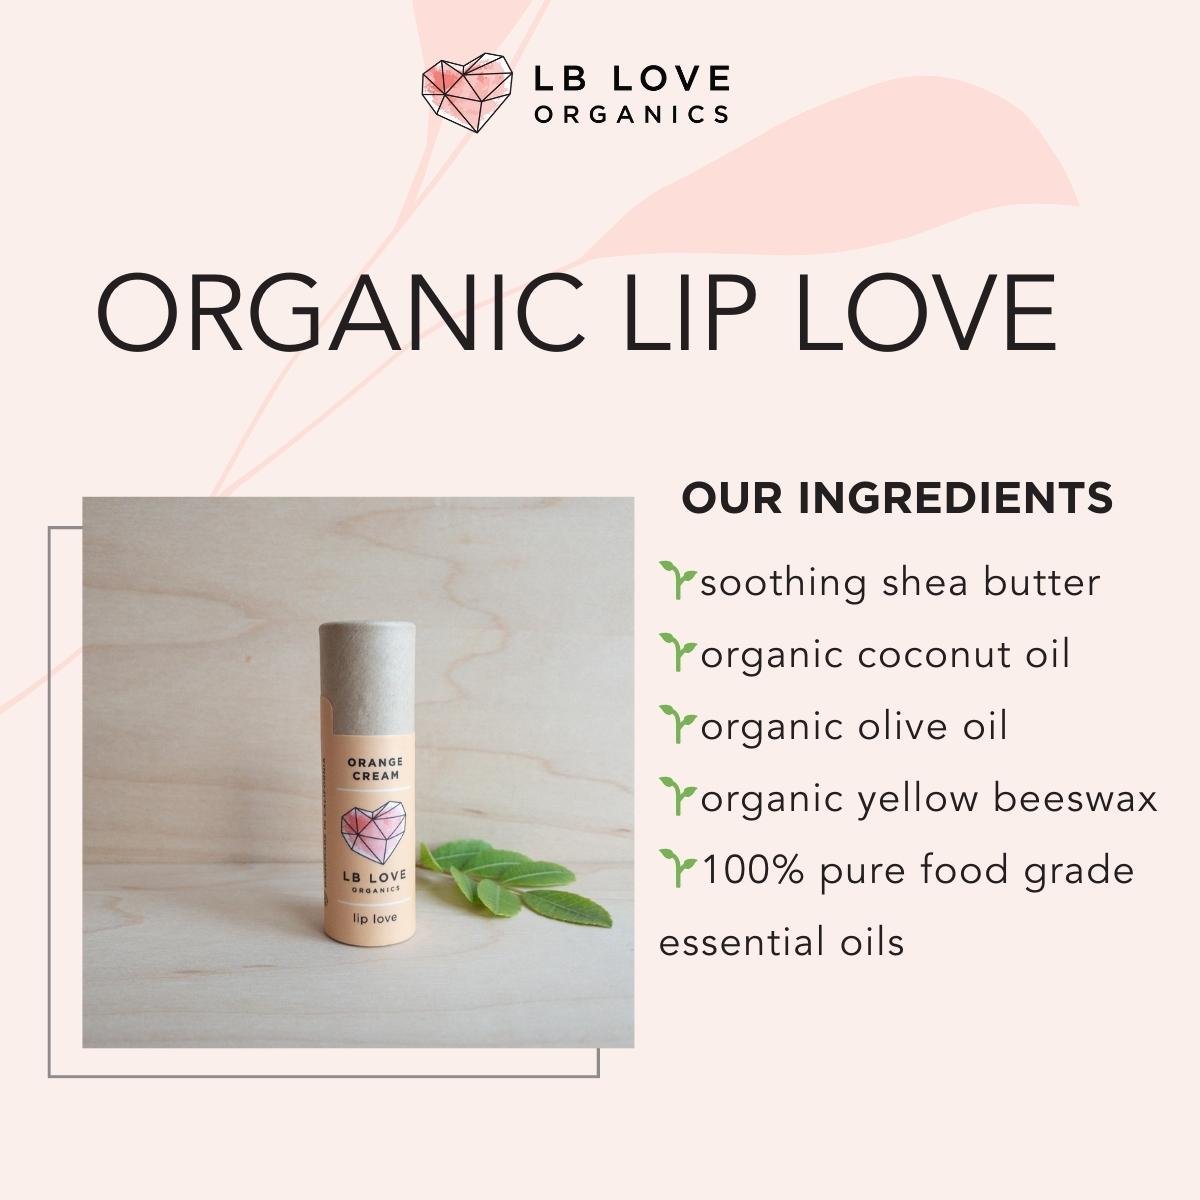 Orange Cream Organic Lip Love Zero Waste